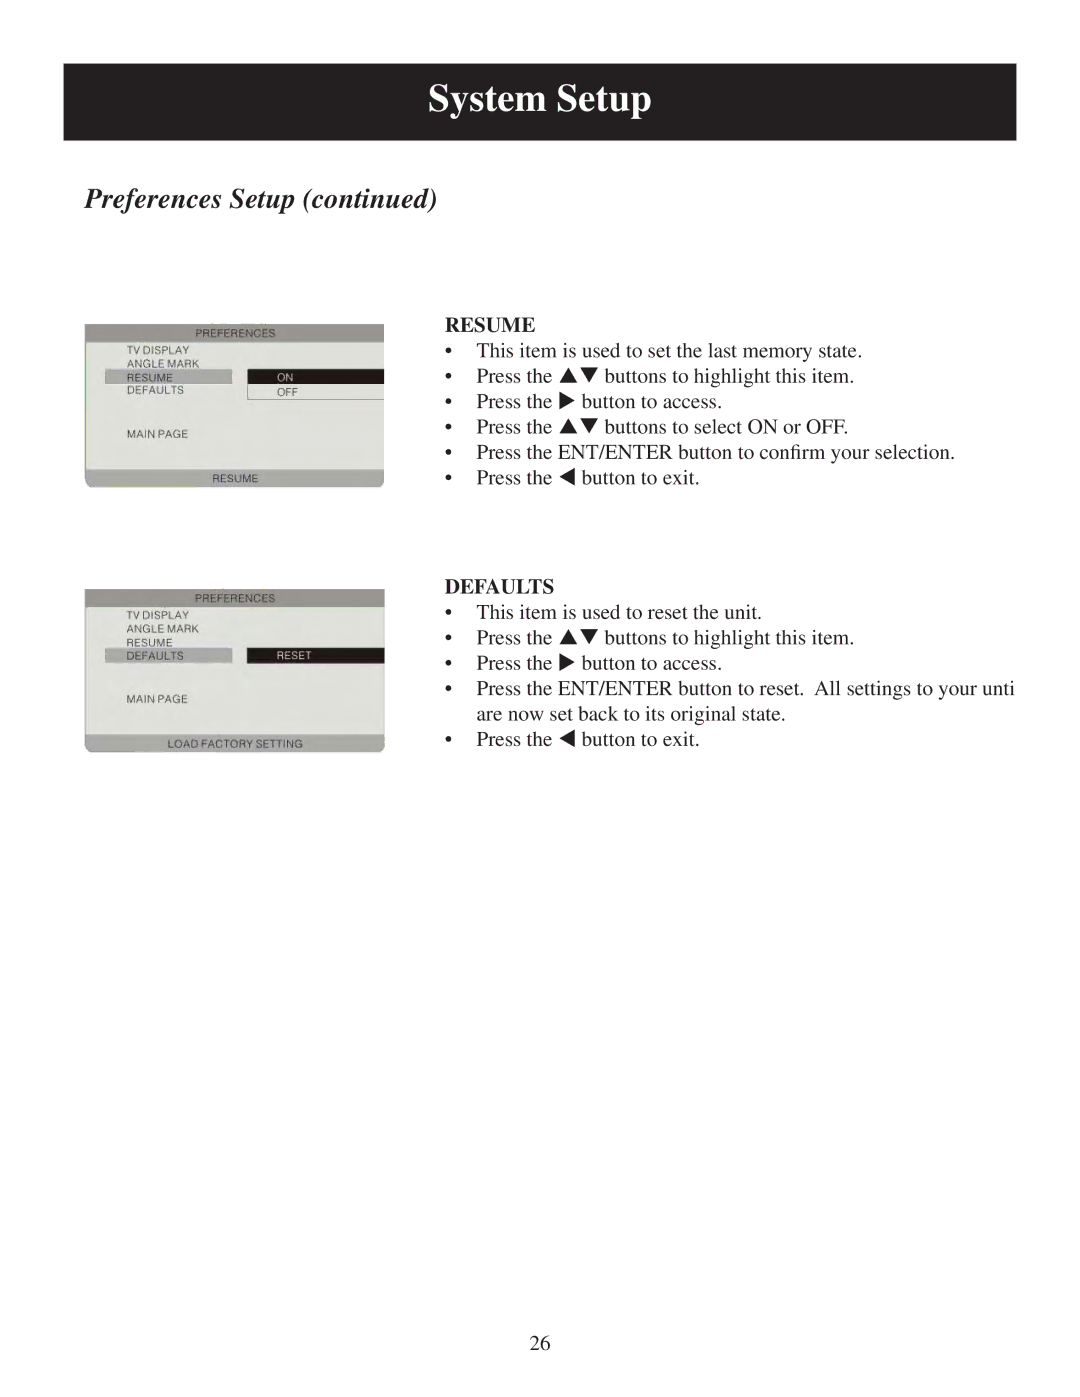 Polaroid PDM-8553M user manual Resume, Defaults 